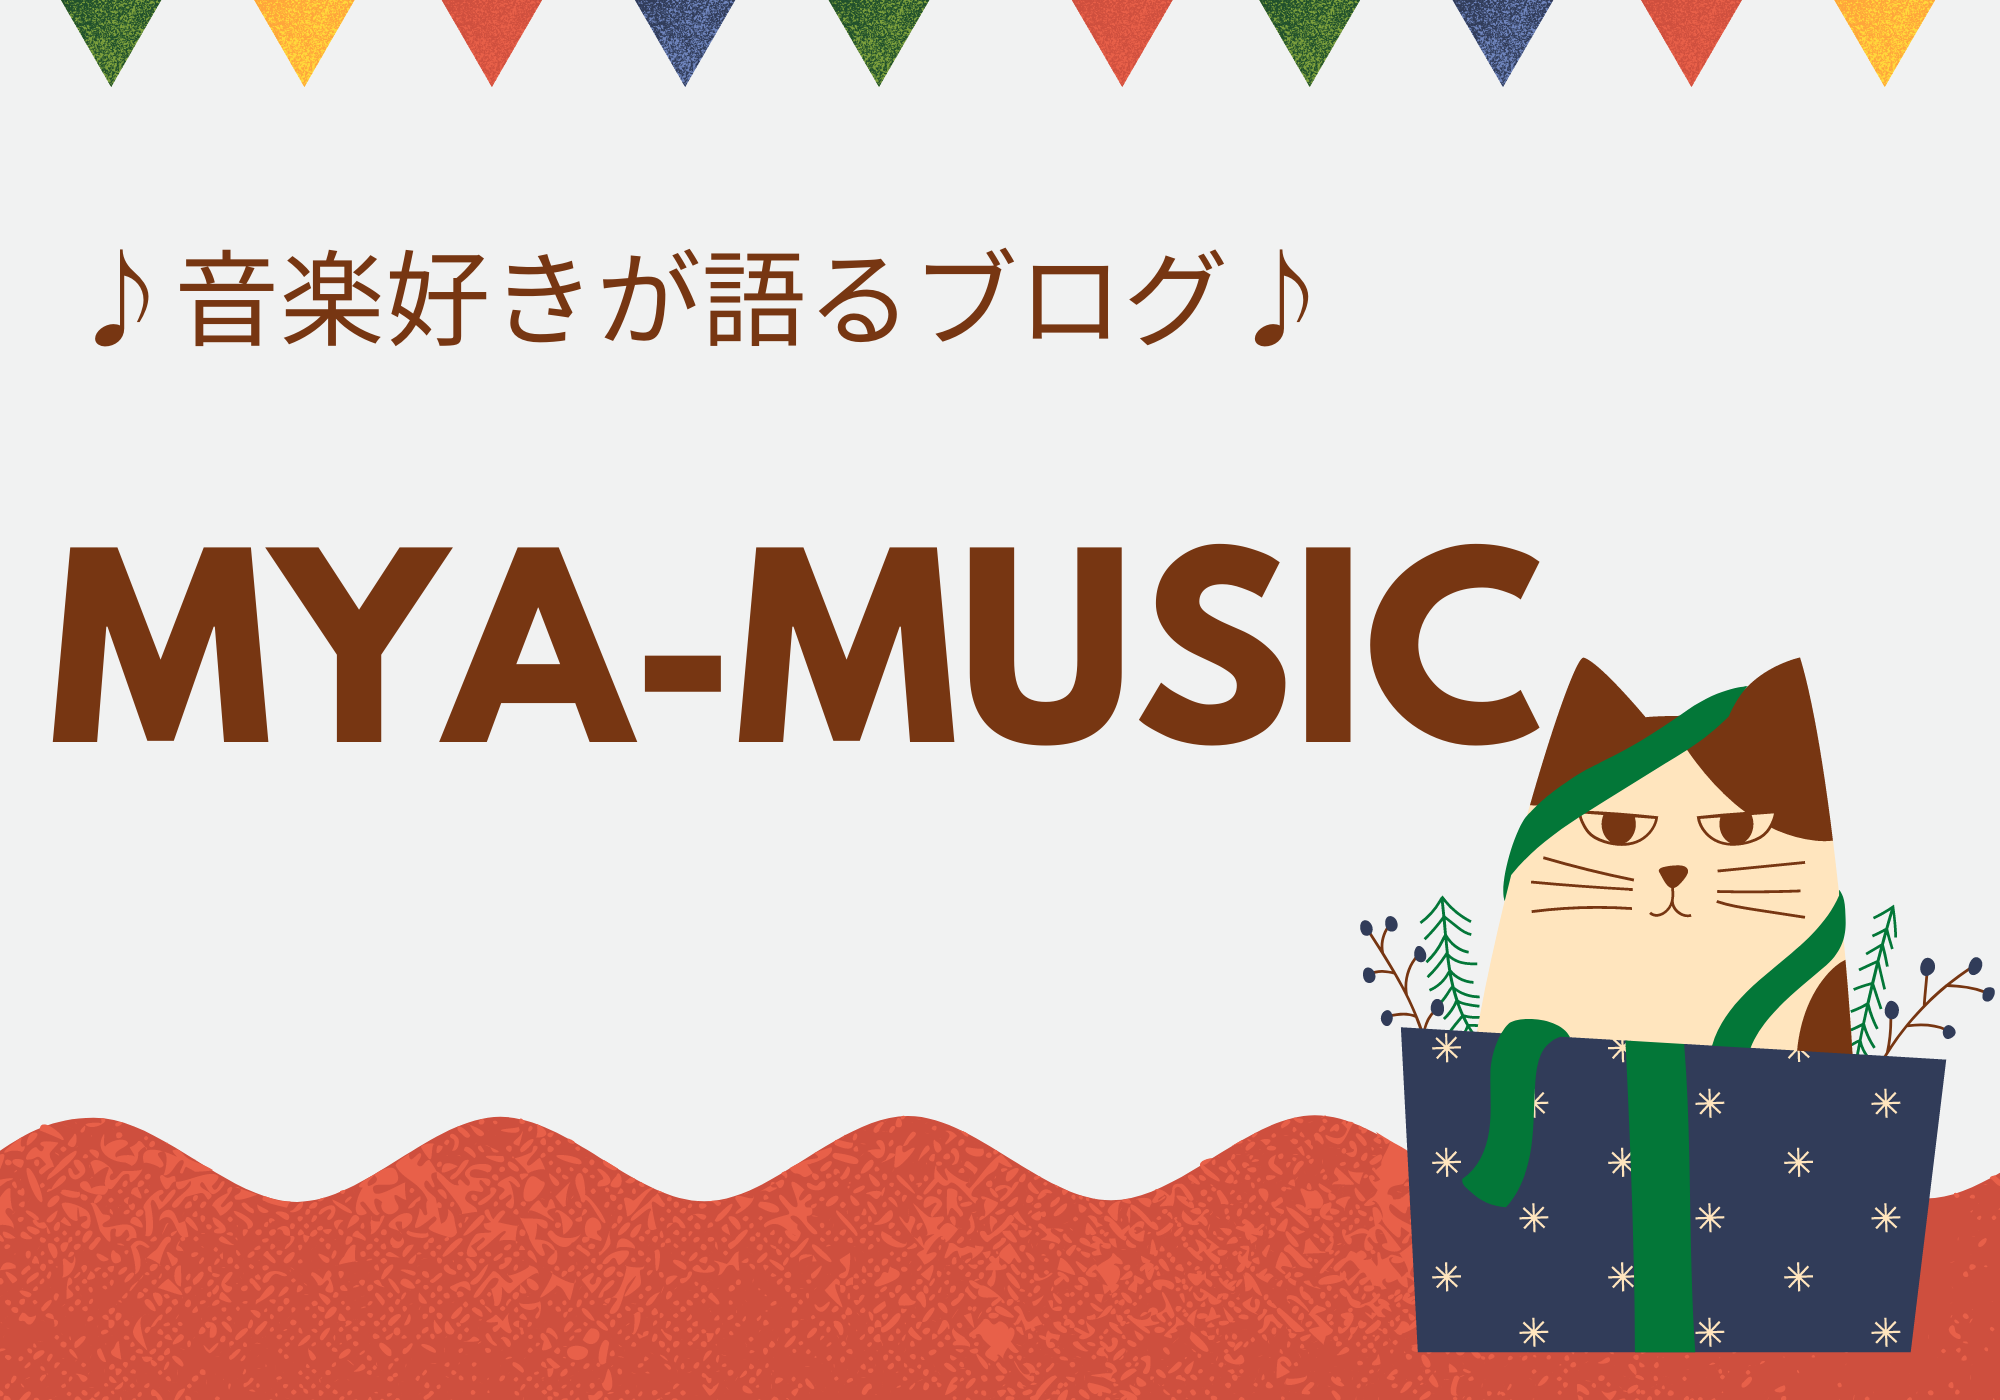 mya-music